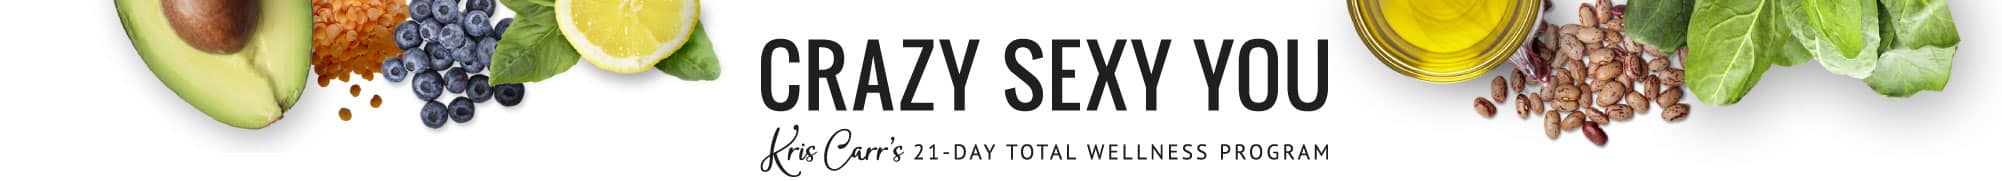 Crazy Sexy You - Kris Carr's 21 Day Total Wellness Program